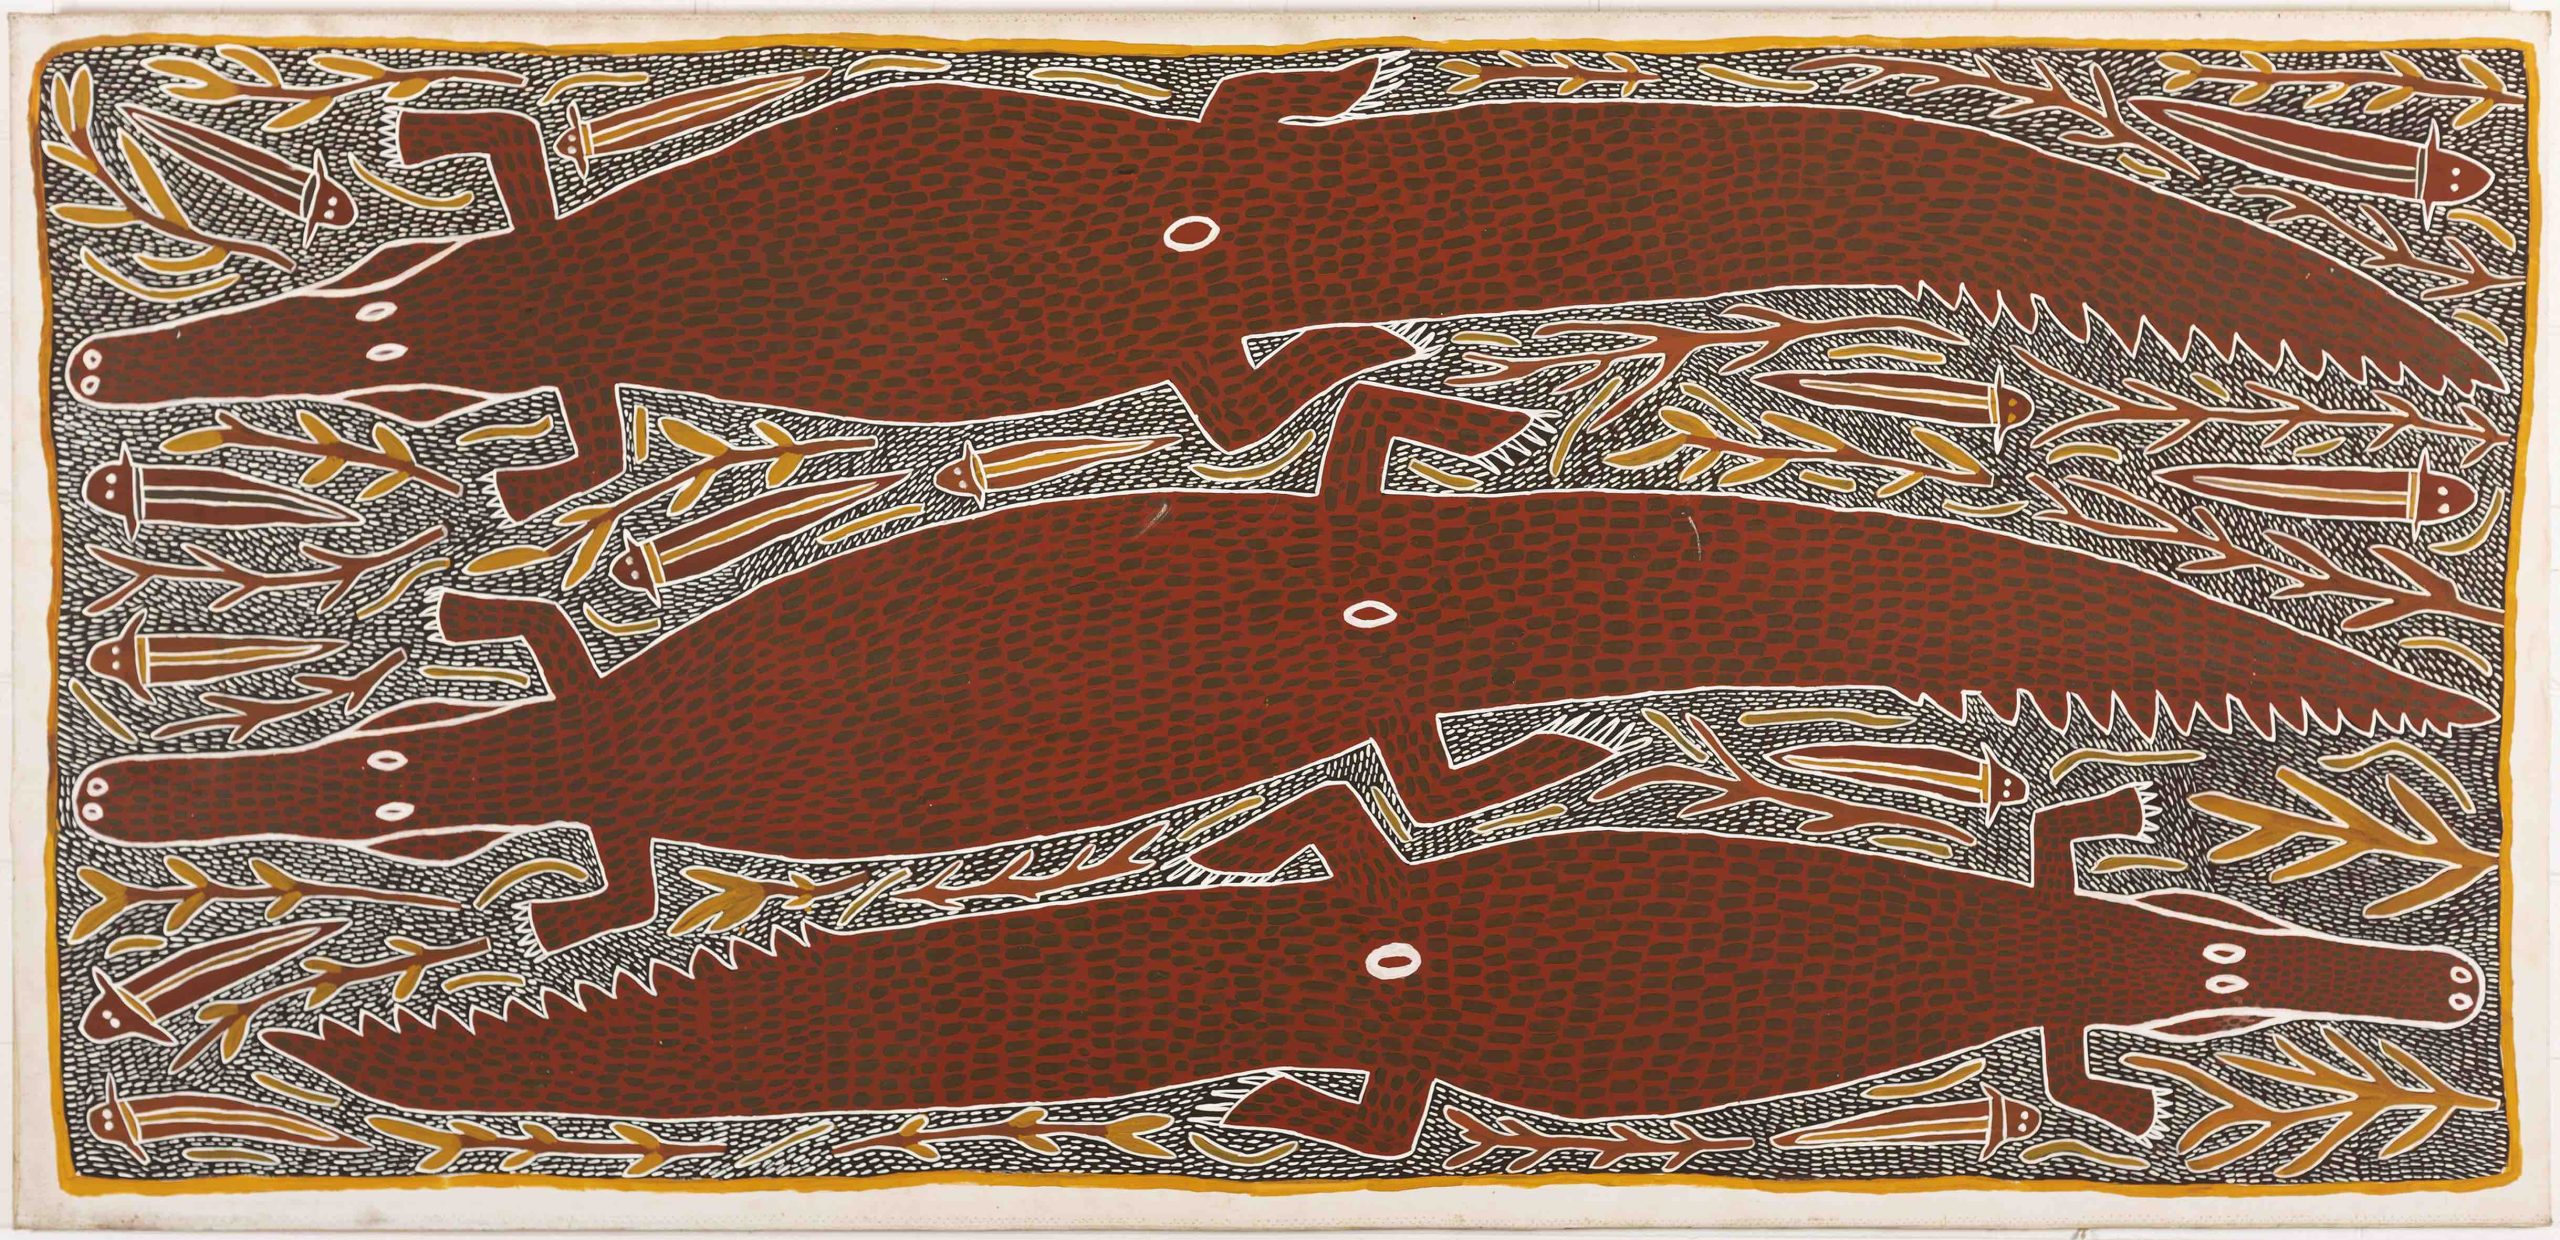 Djambu Barra Barra Sambo Burra Burra painting Aboriginal artist Songlines Darwin